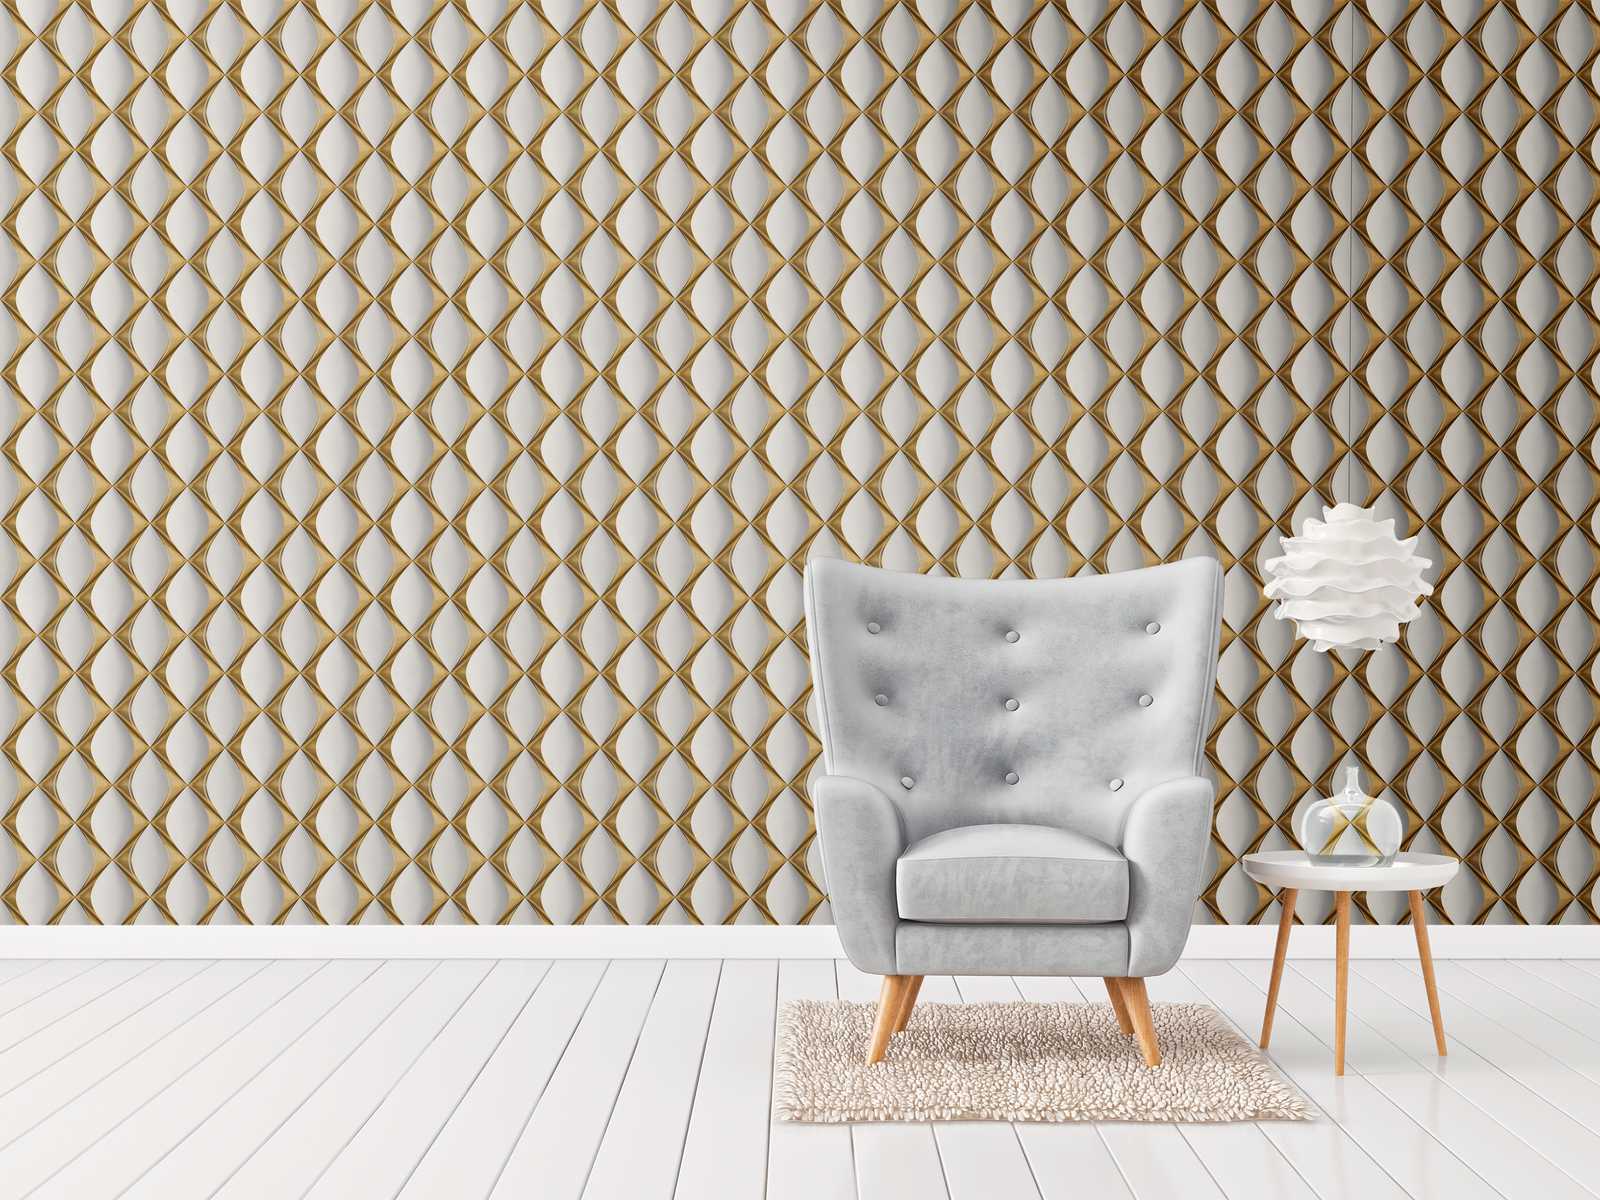             3D wallpaper golden retro pattern - white, grey, metallic
        